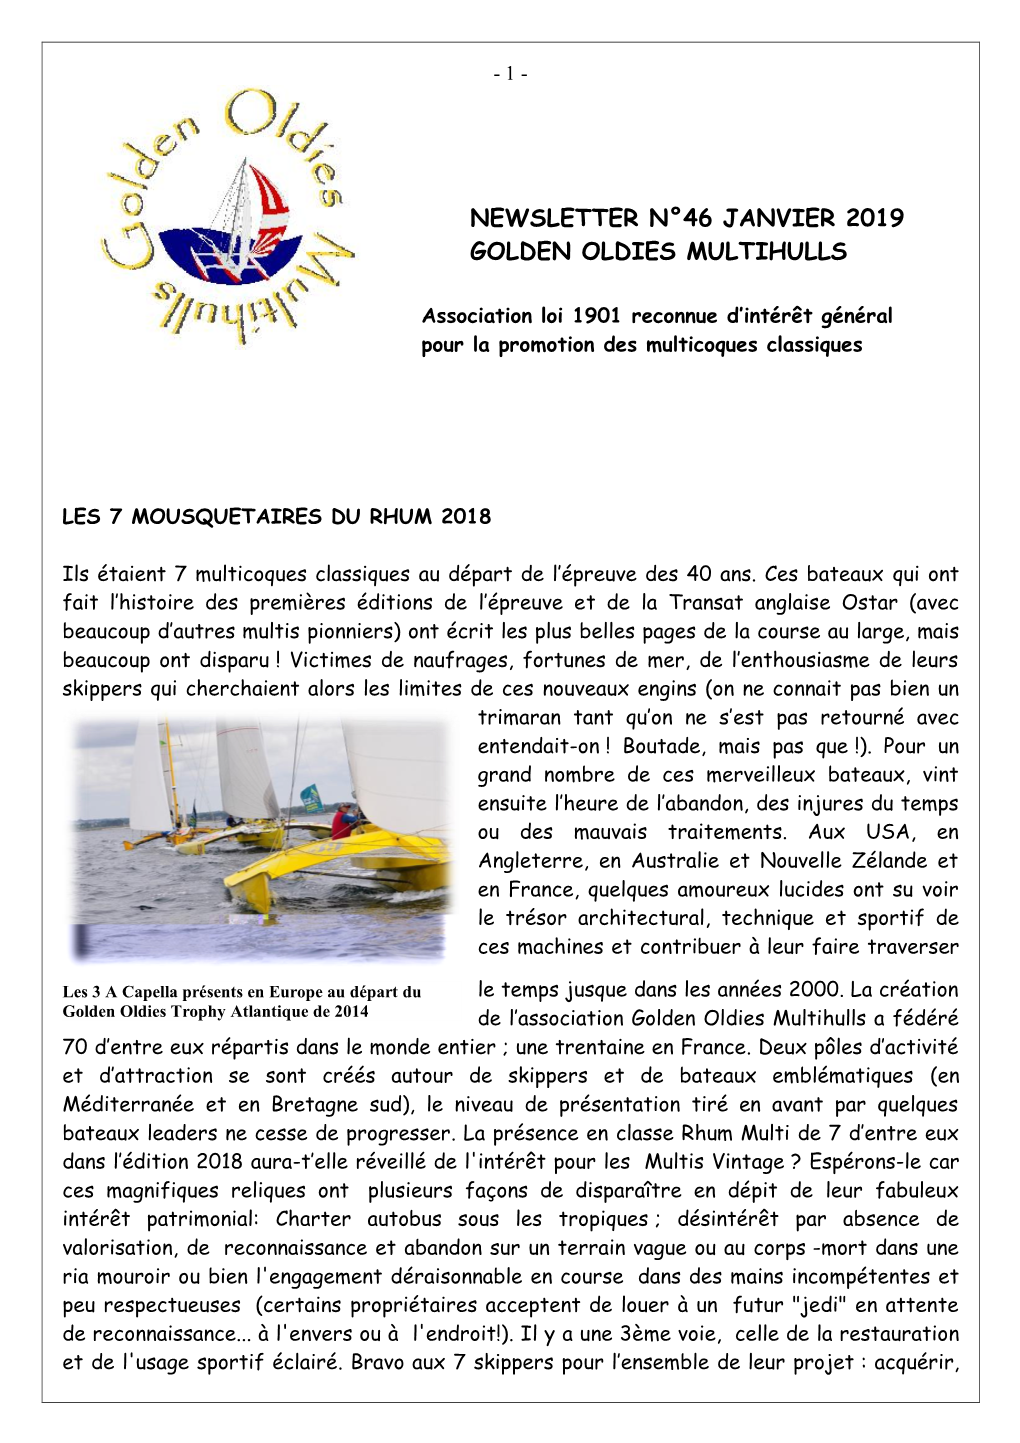 Newsletter N°46 Janvier 2019 Golden Oldies Multihulls